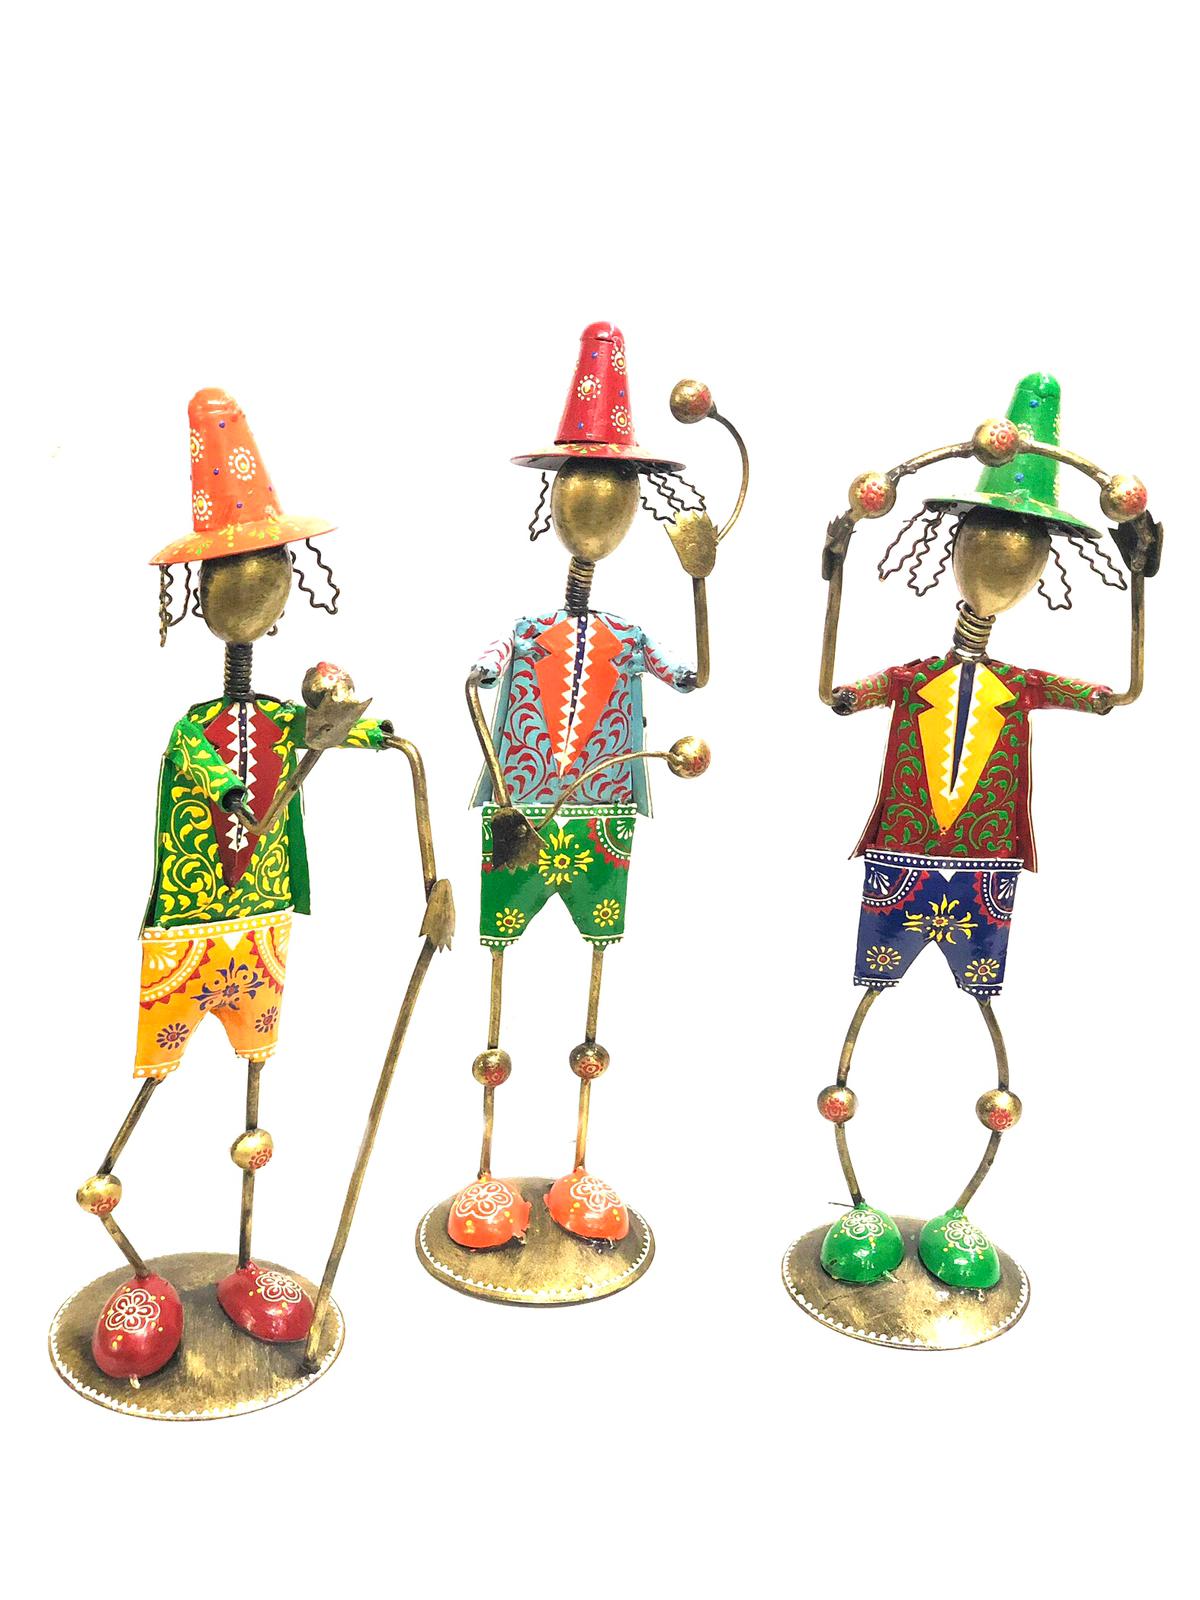 Circus Joker Metal Figurines Handcrafted Showpiece Home Décor Tamrapatra